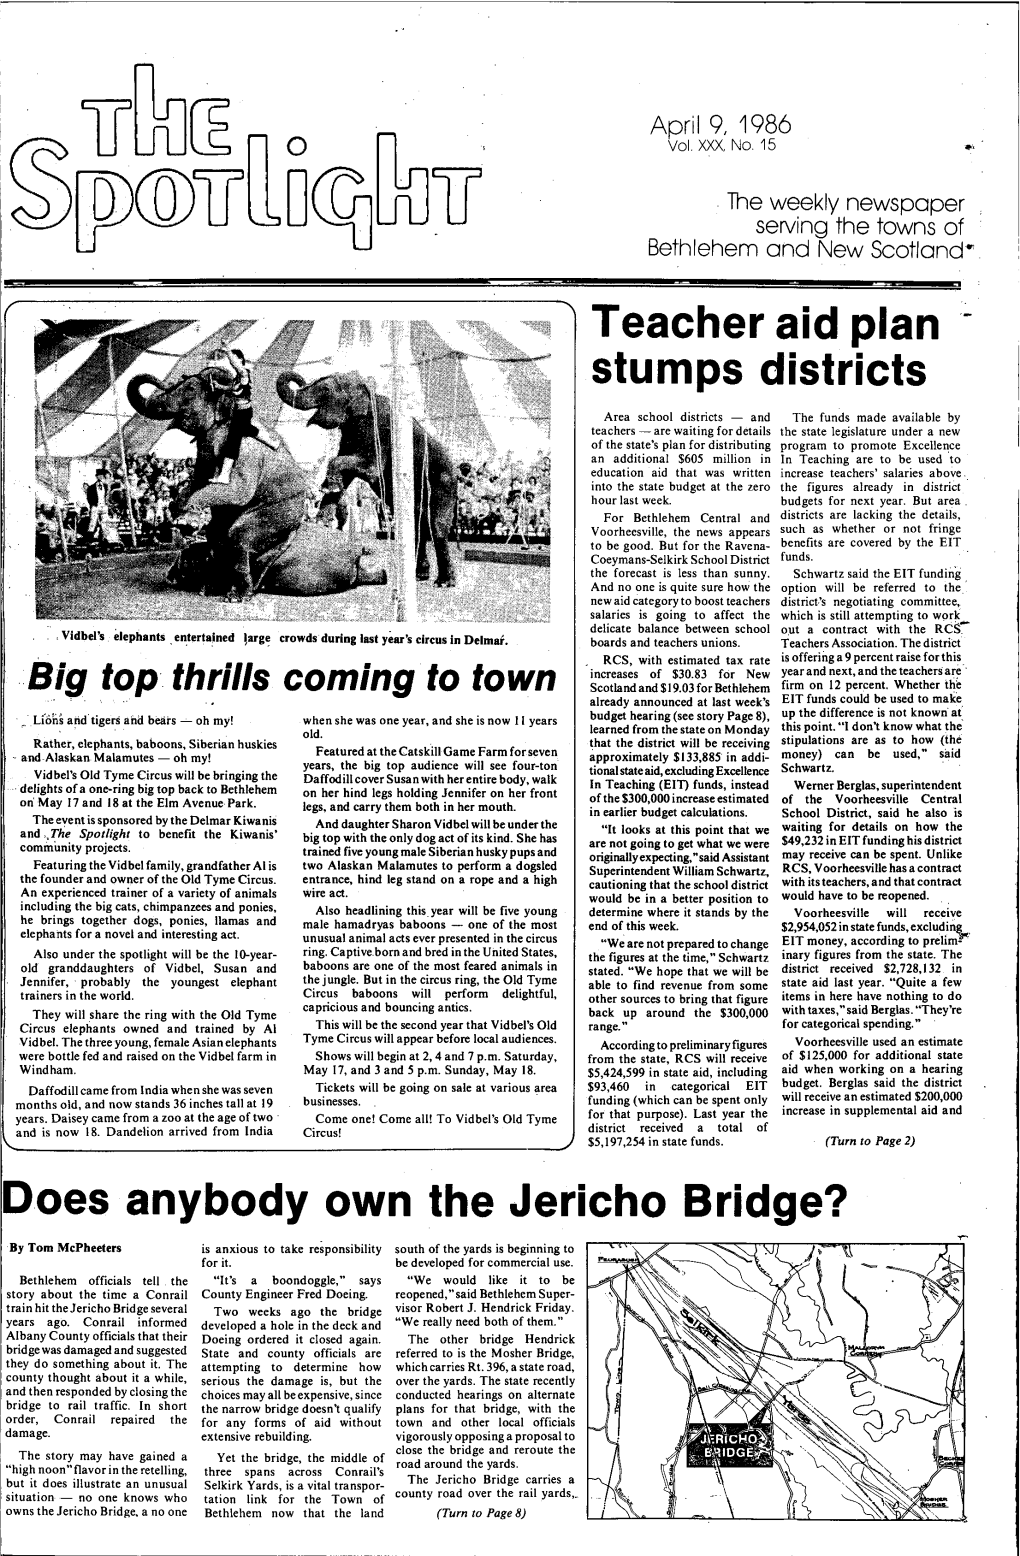 Teacher Aid Plan Stumps Districts Does Anybody Own the Jericho Bridge?